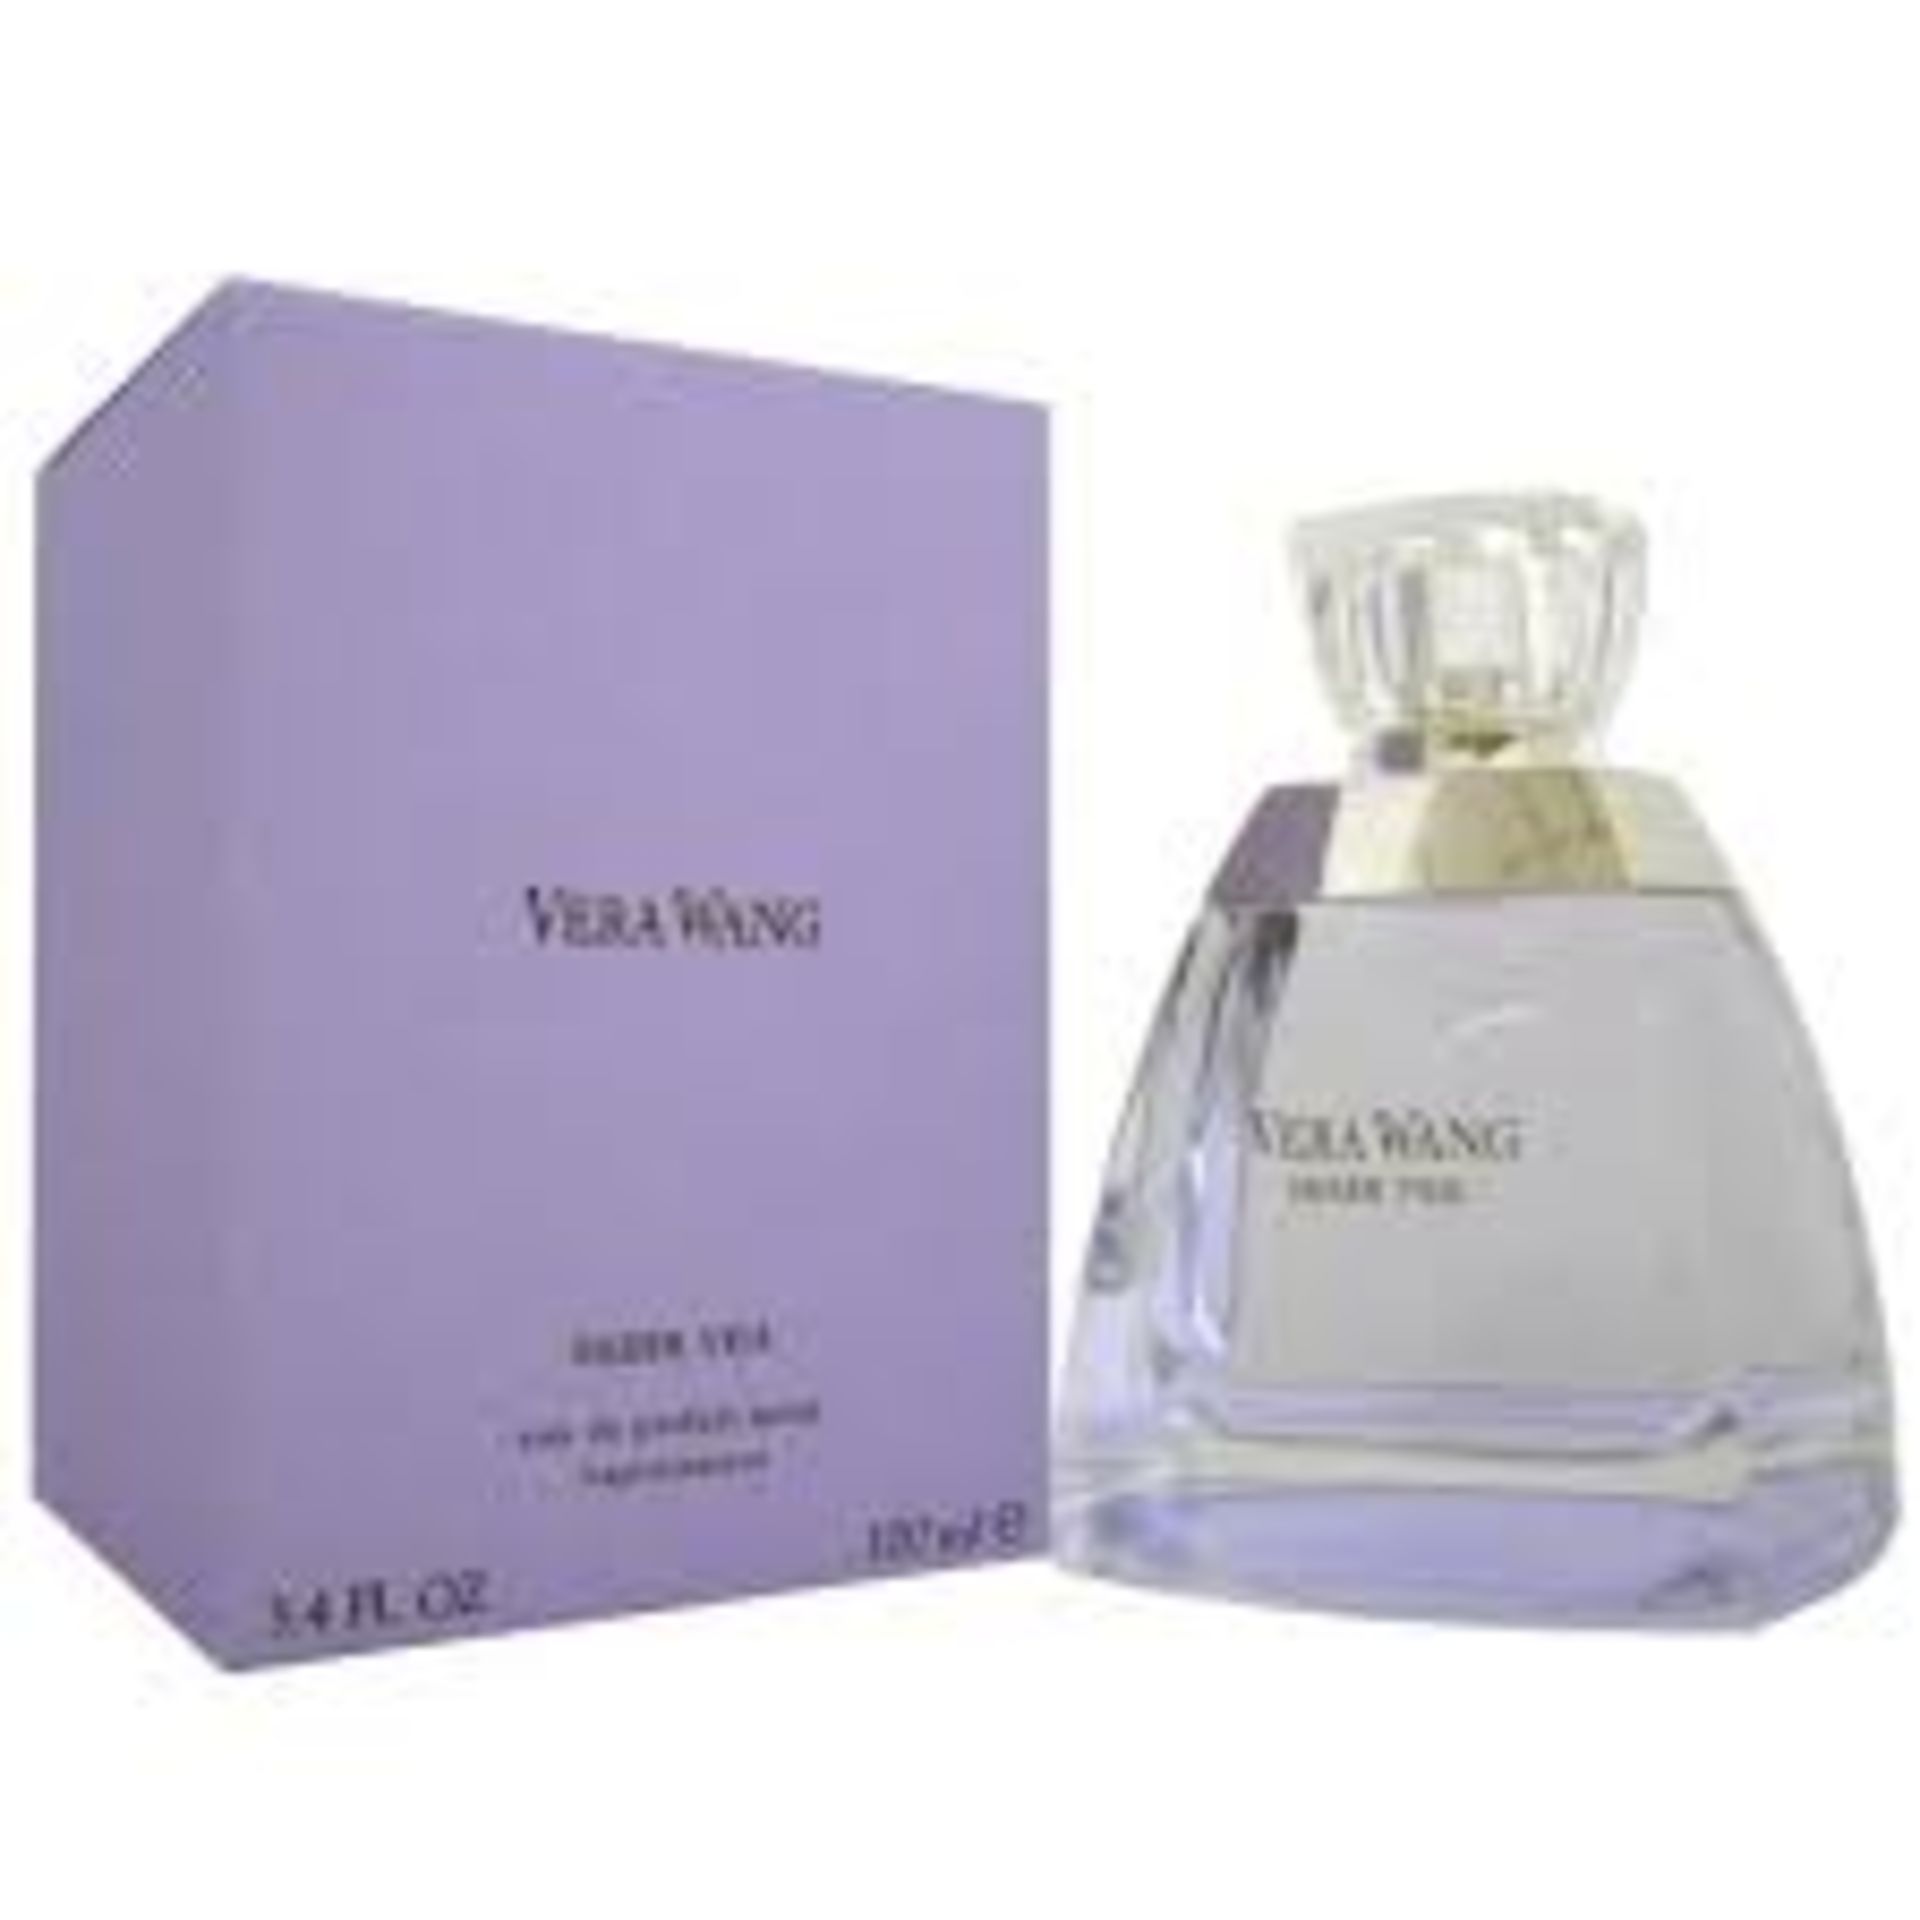 V Brand New Vera Wang Sheer Veil 100 ml EDP spray - Price Perfumes Scent Direct Ltd £32.97 X 2